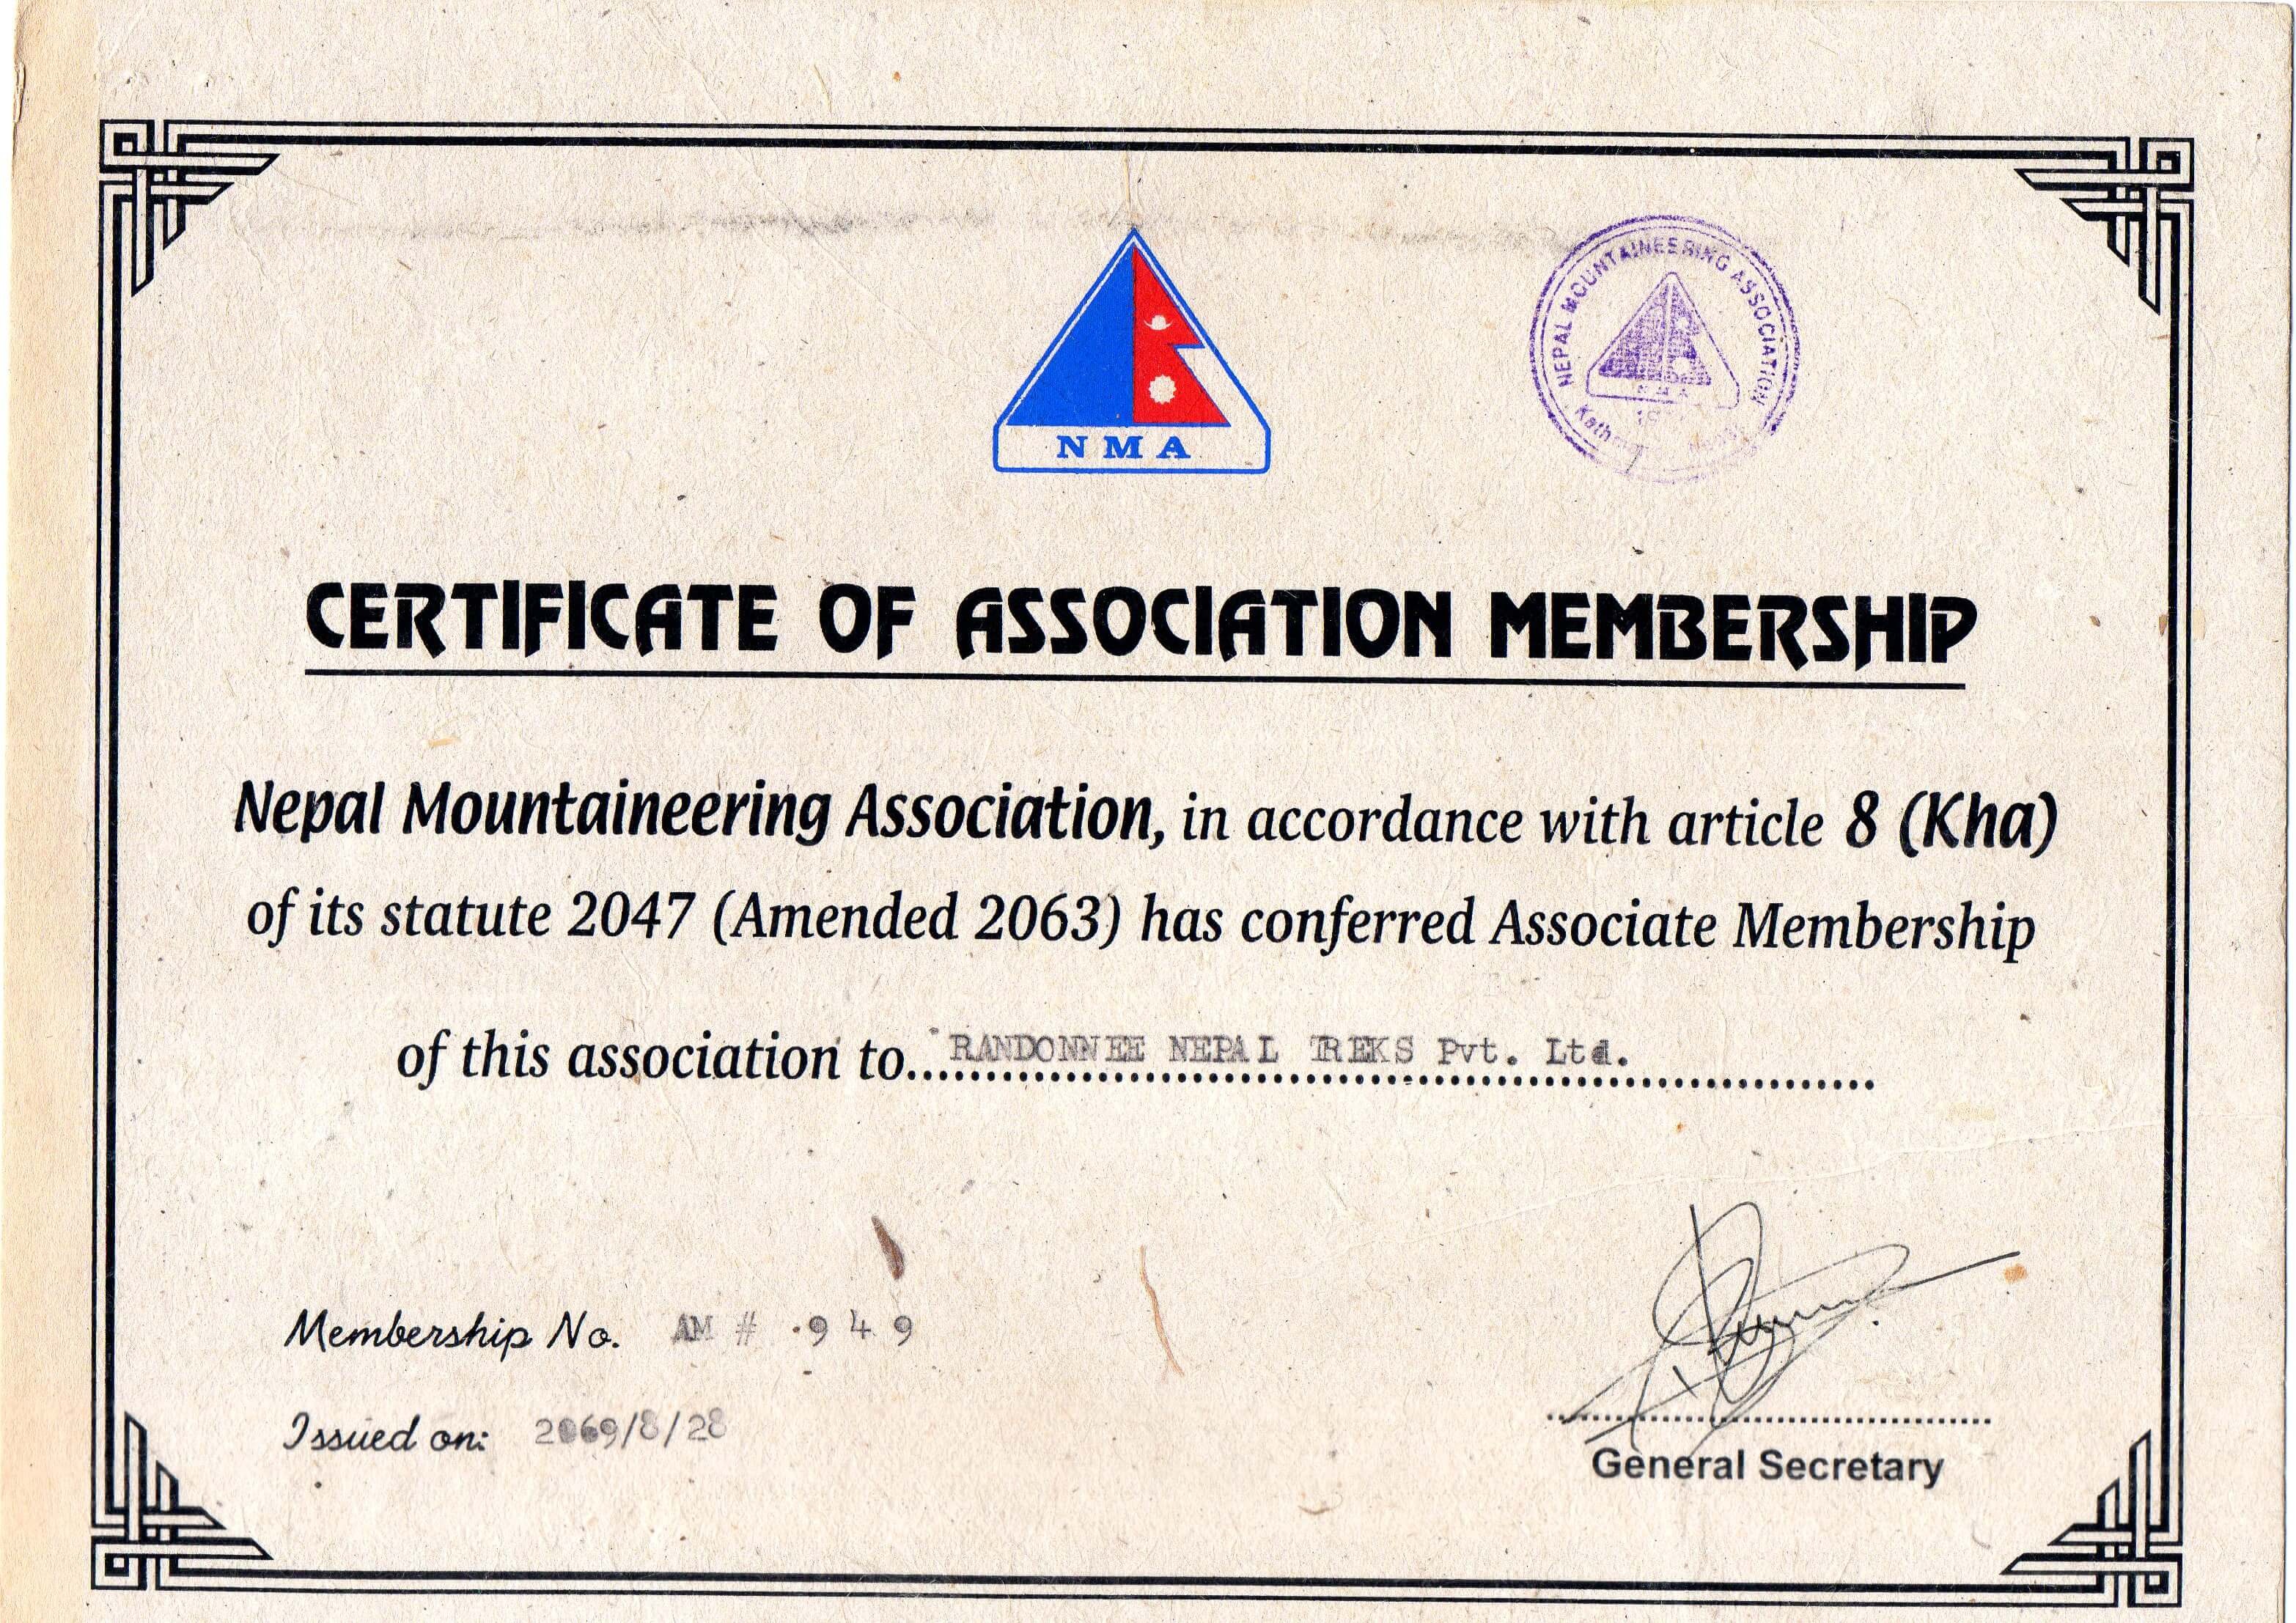 Membership Certificate of Association